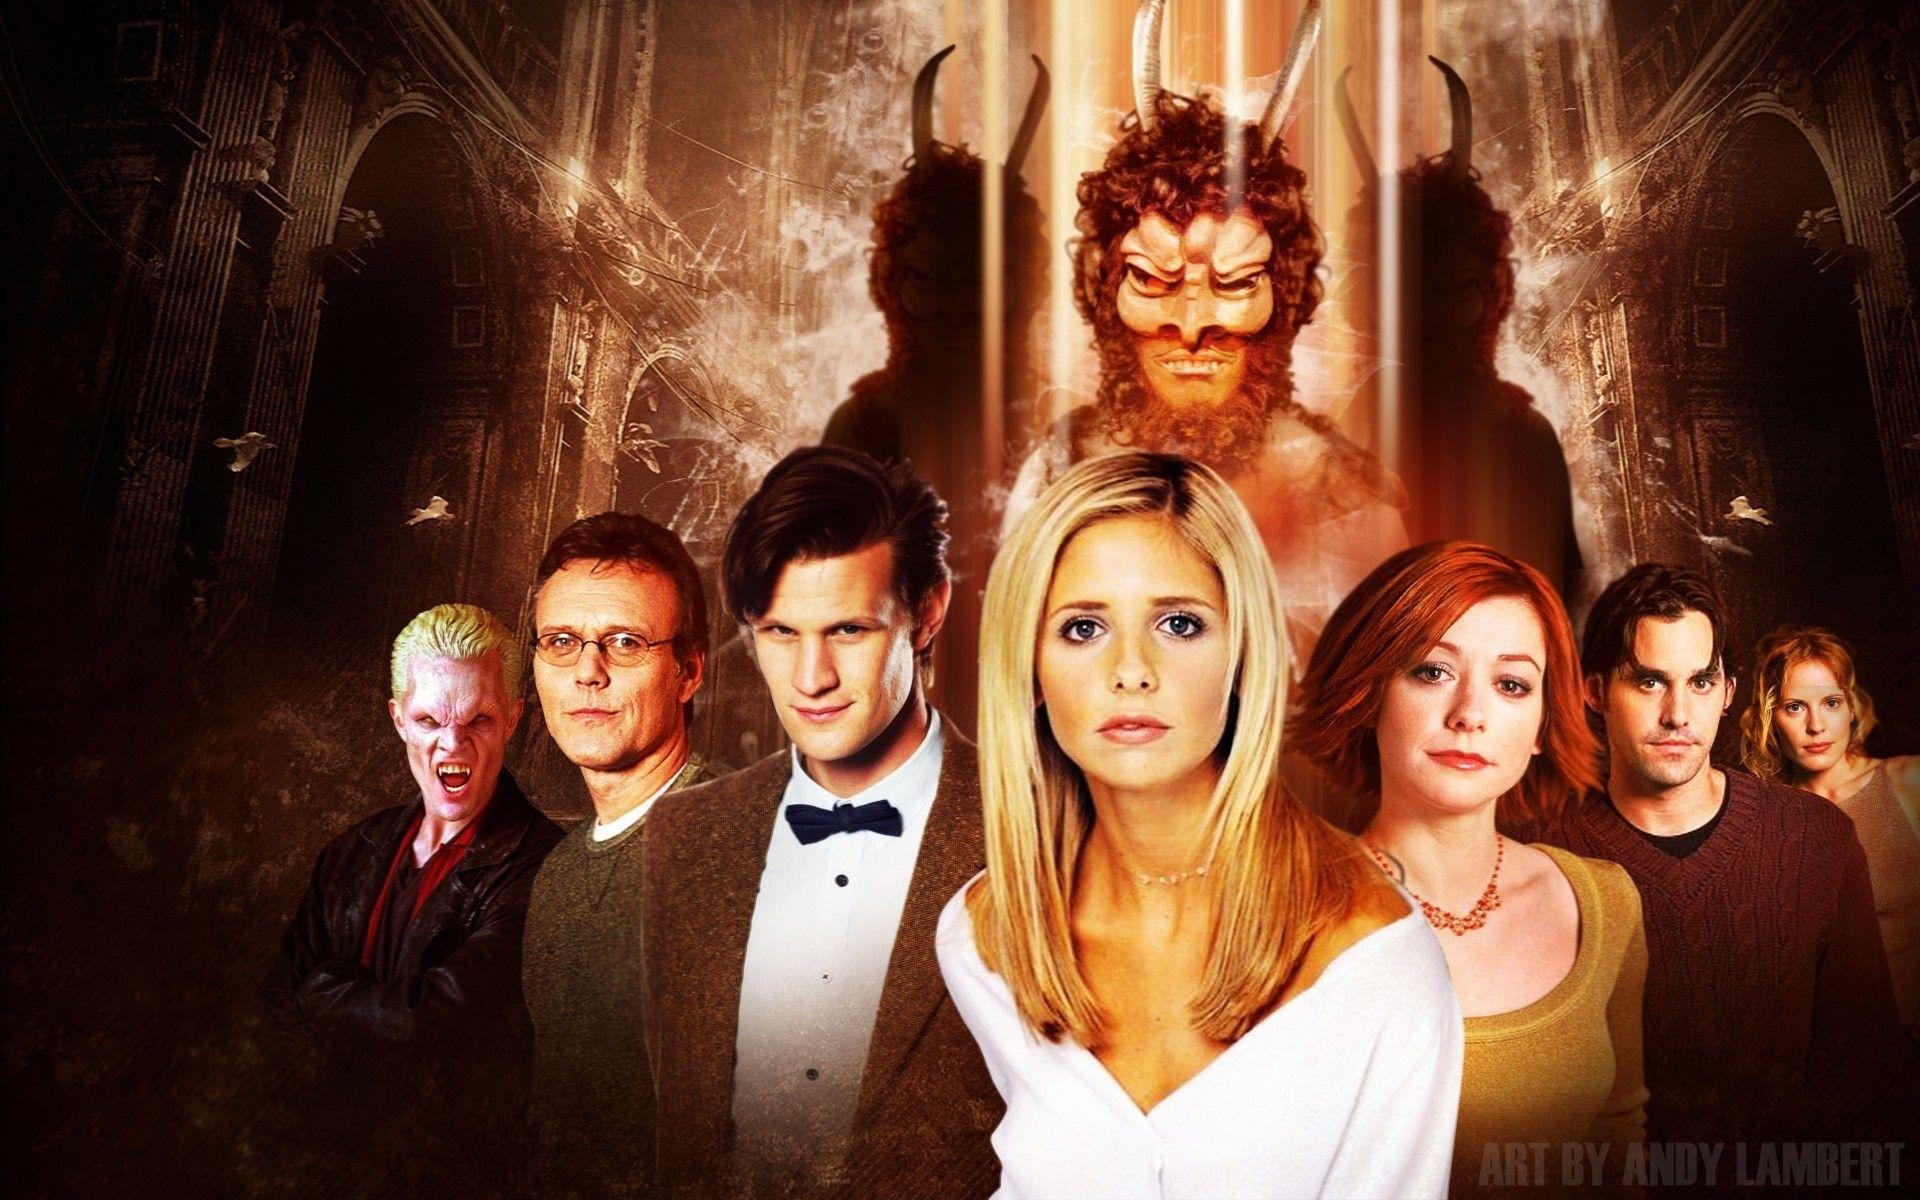 Buffy the Vampire Slayer Wallpaper Free Buffy